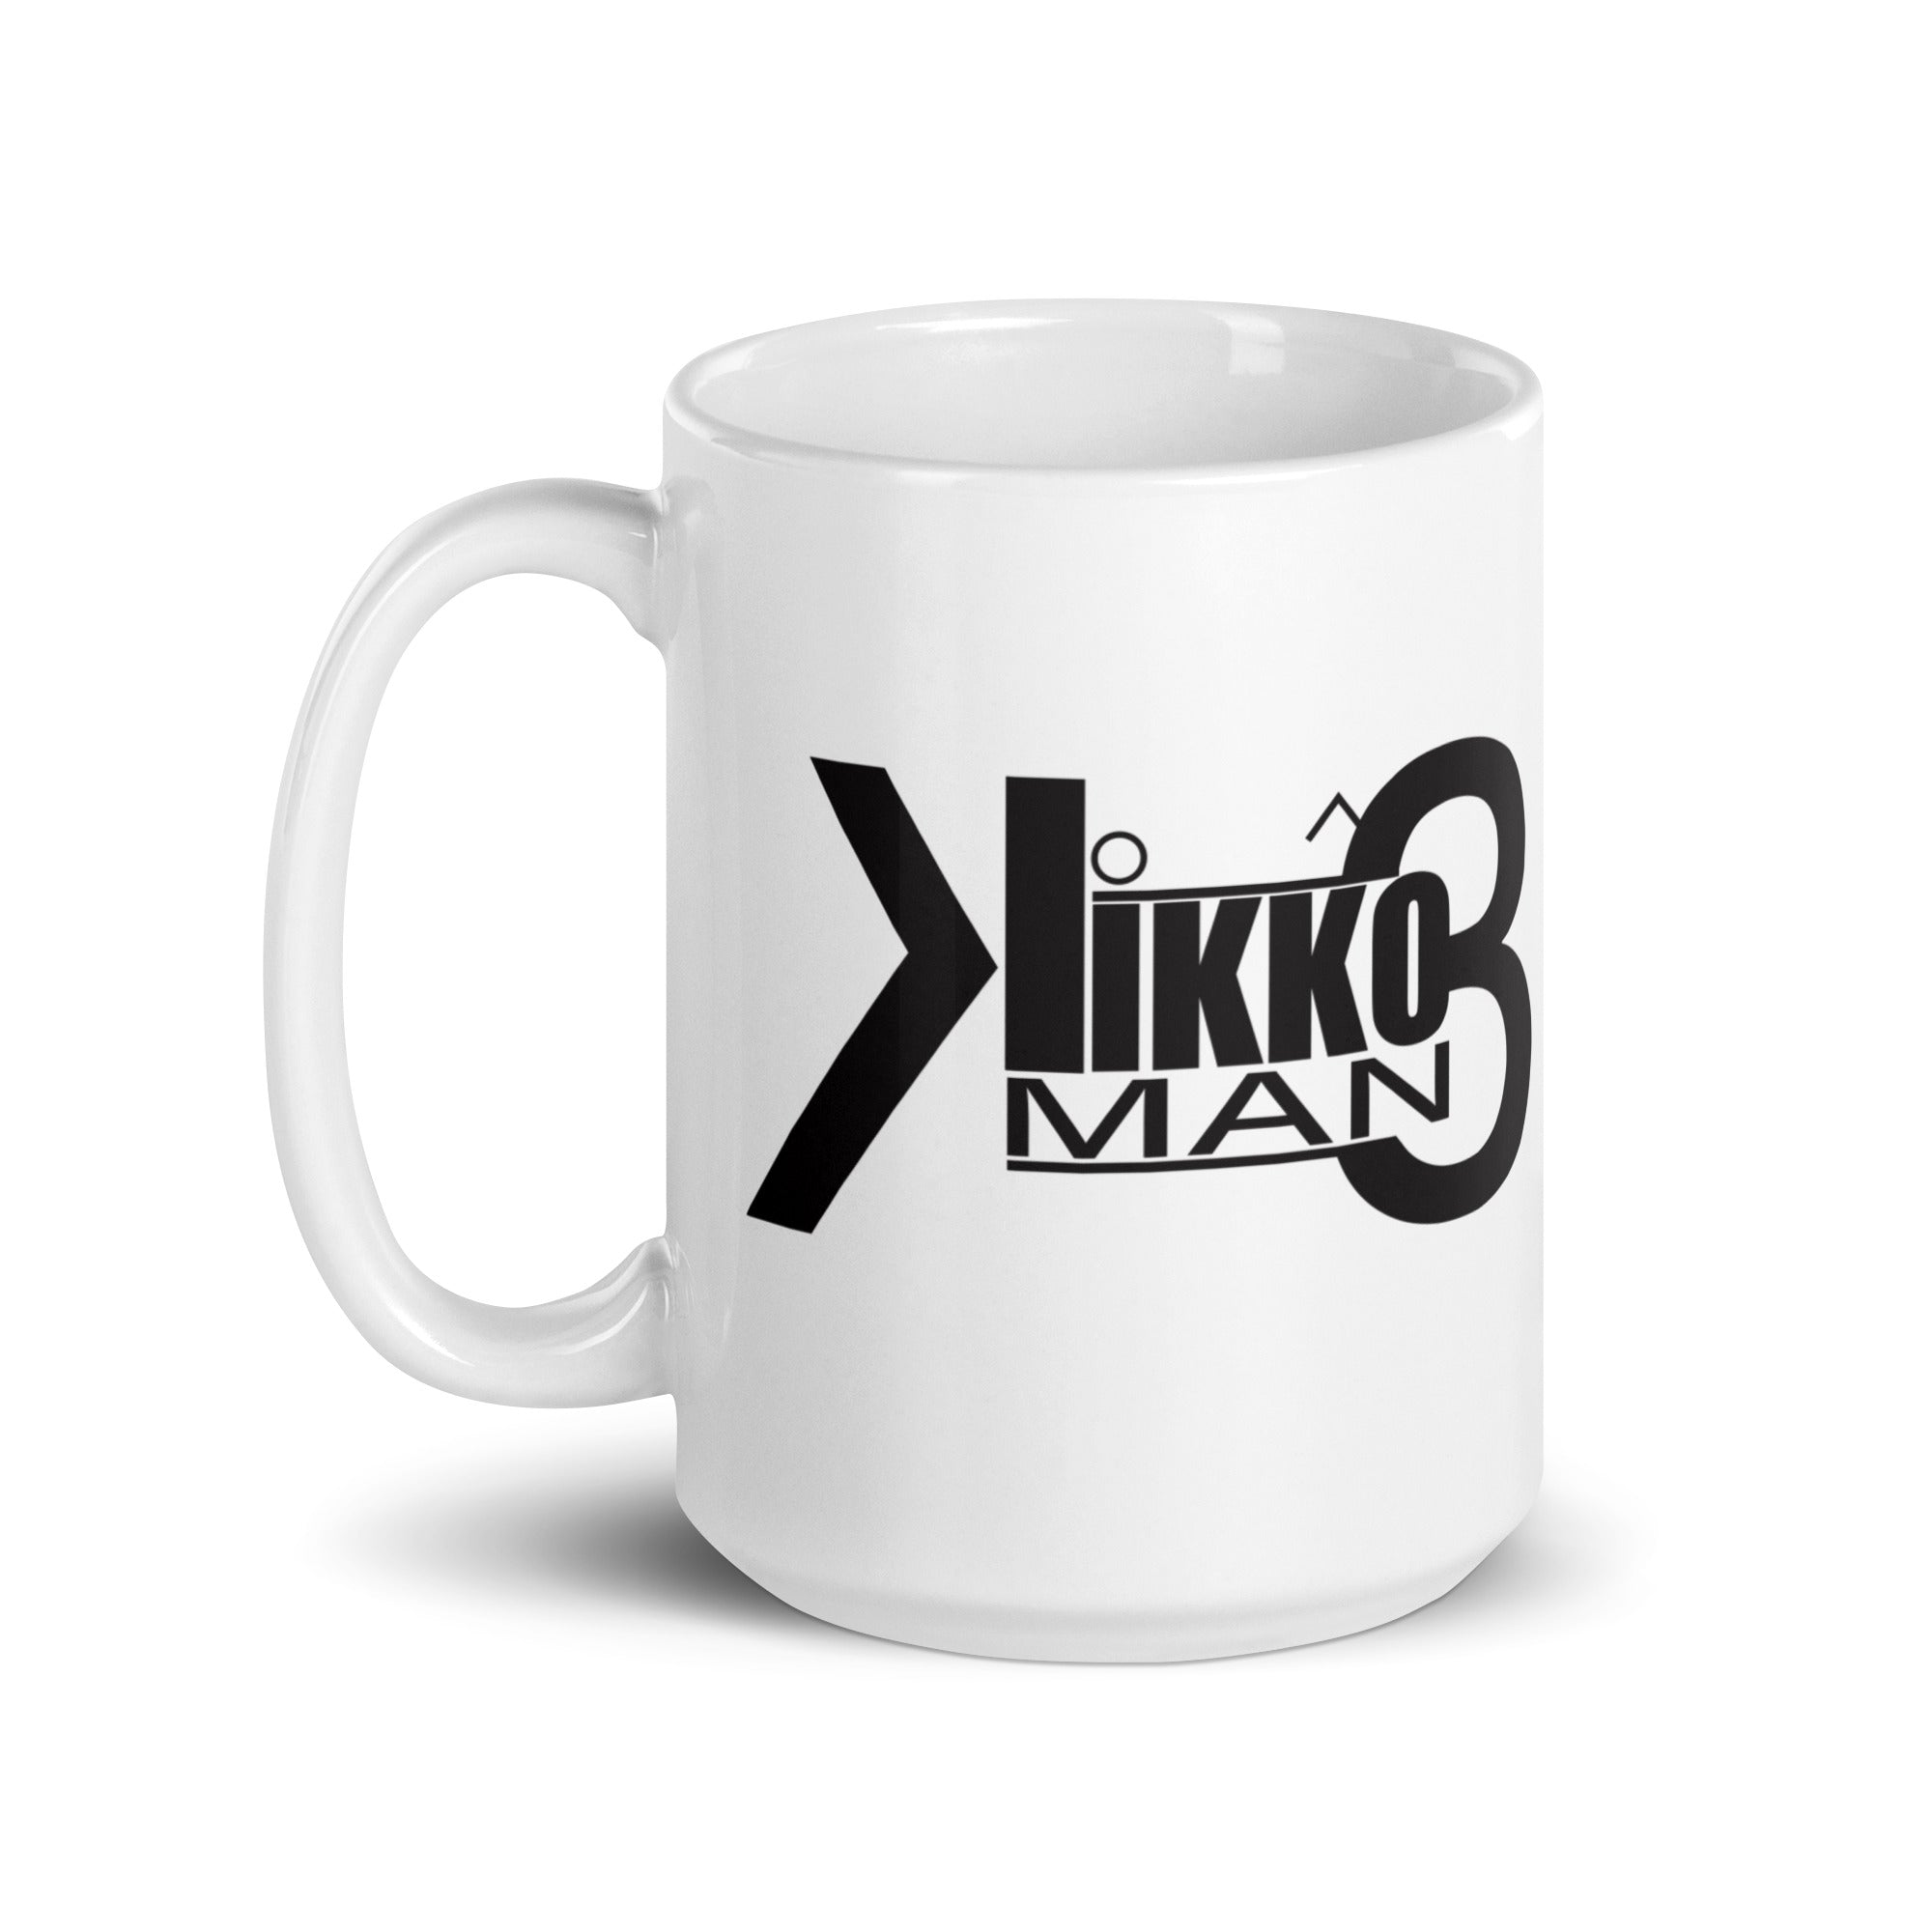 Kikkoman3 - White glossy mug